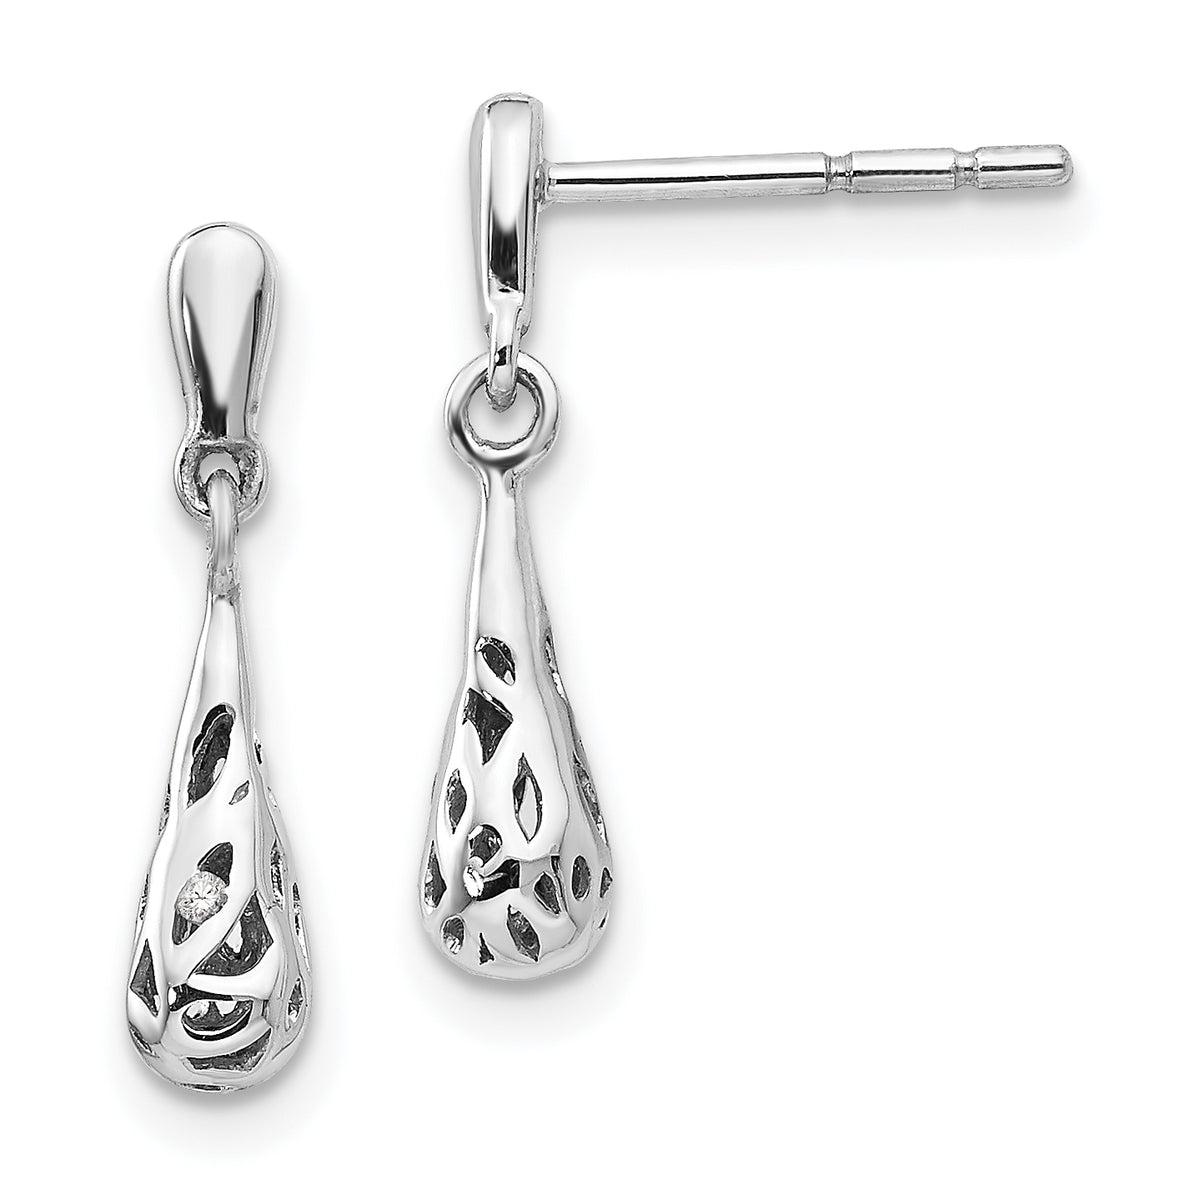 White Ice Sterling Silver Rhodium-plated Diamond Filgree Post Dangle Earrings